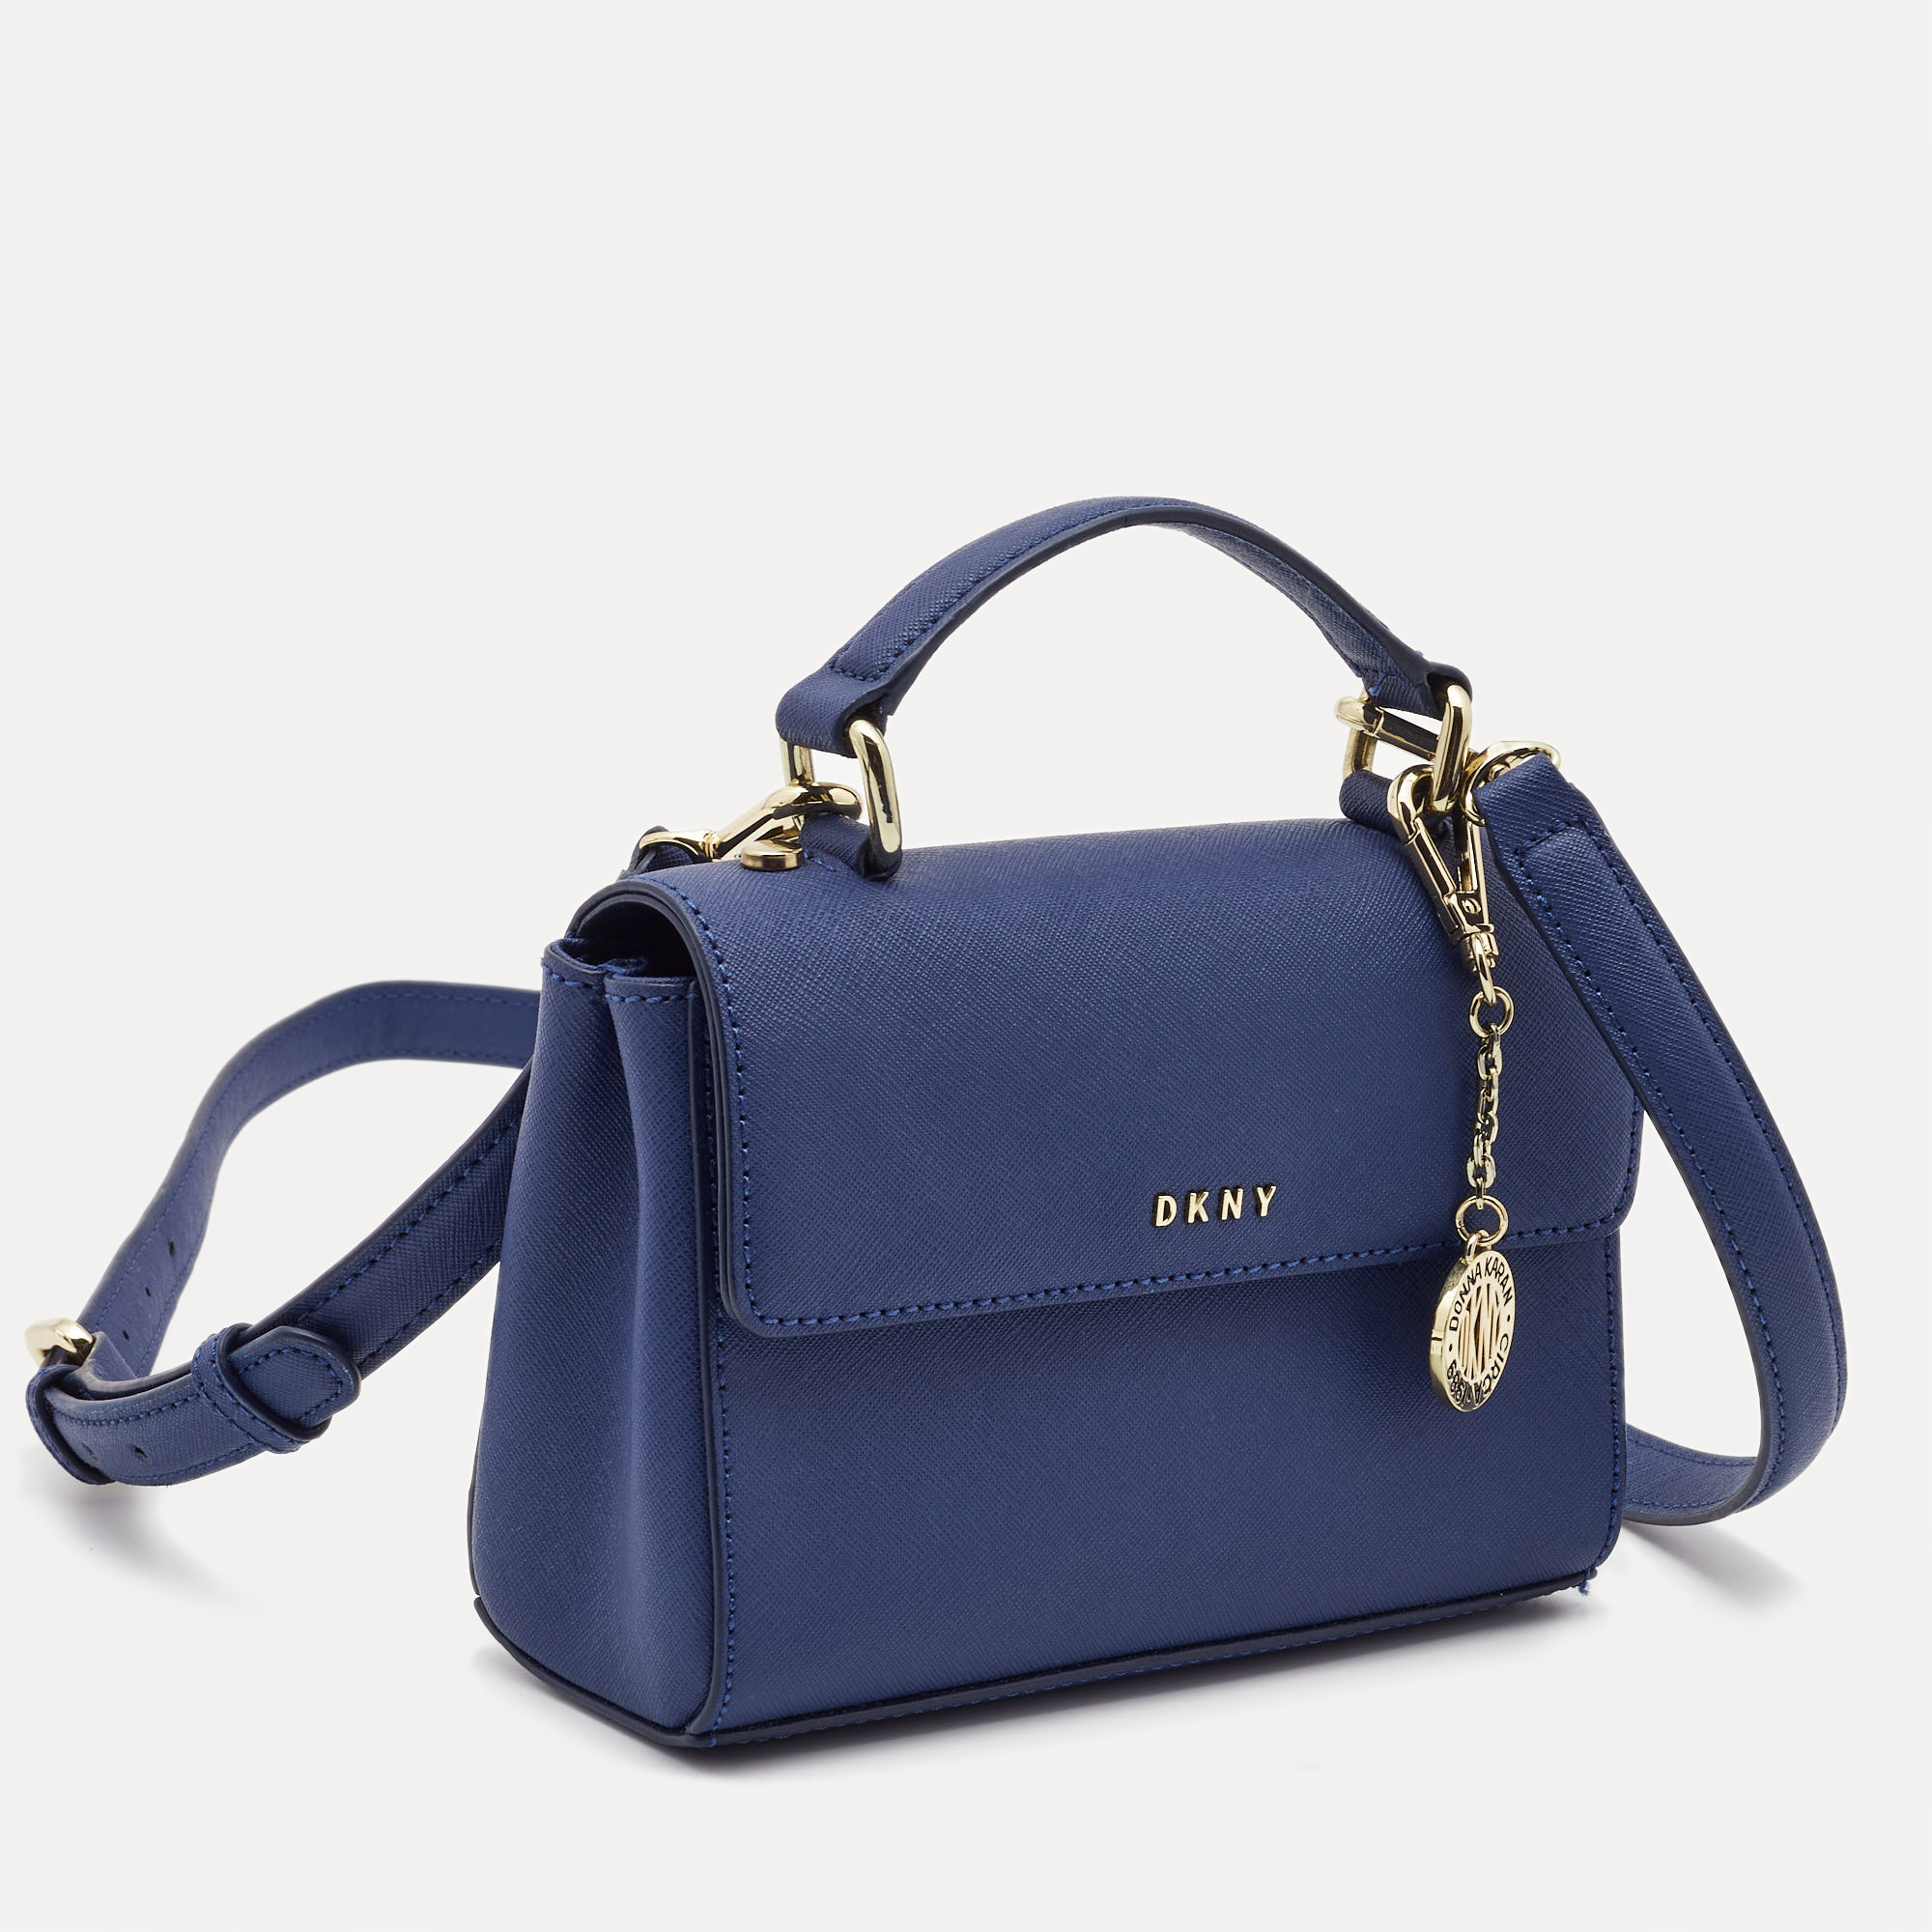 DKNY Blue Saffiano Leather Top Handle Bag